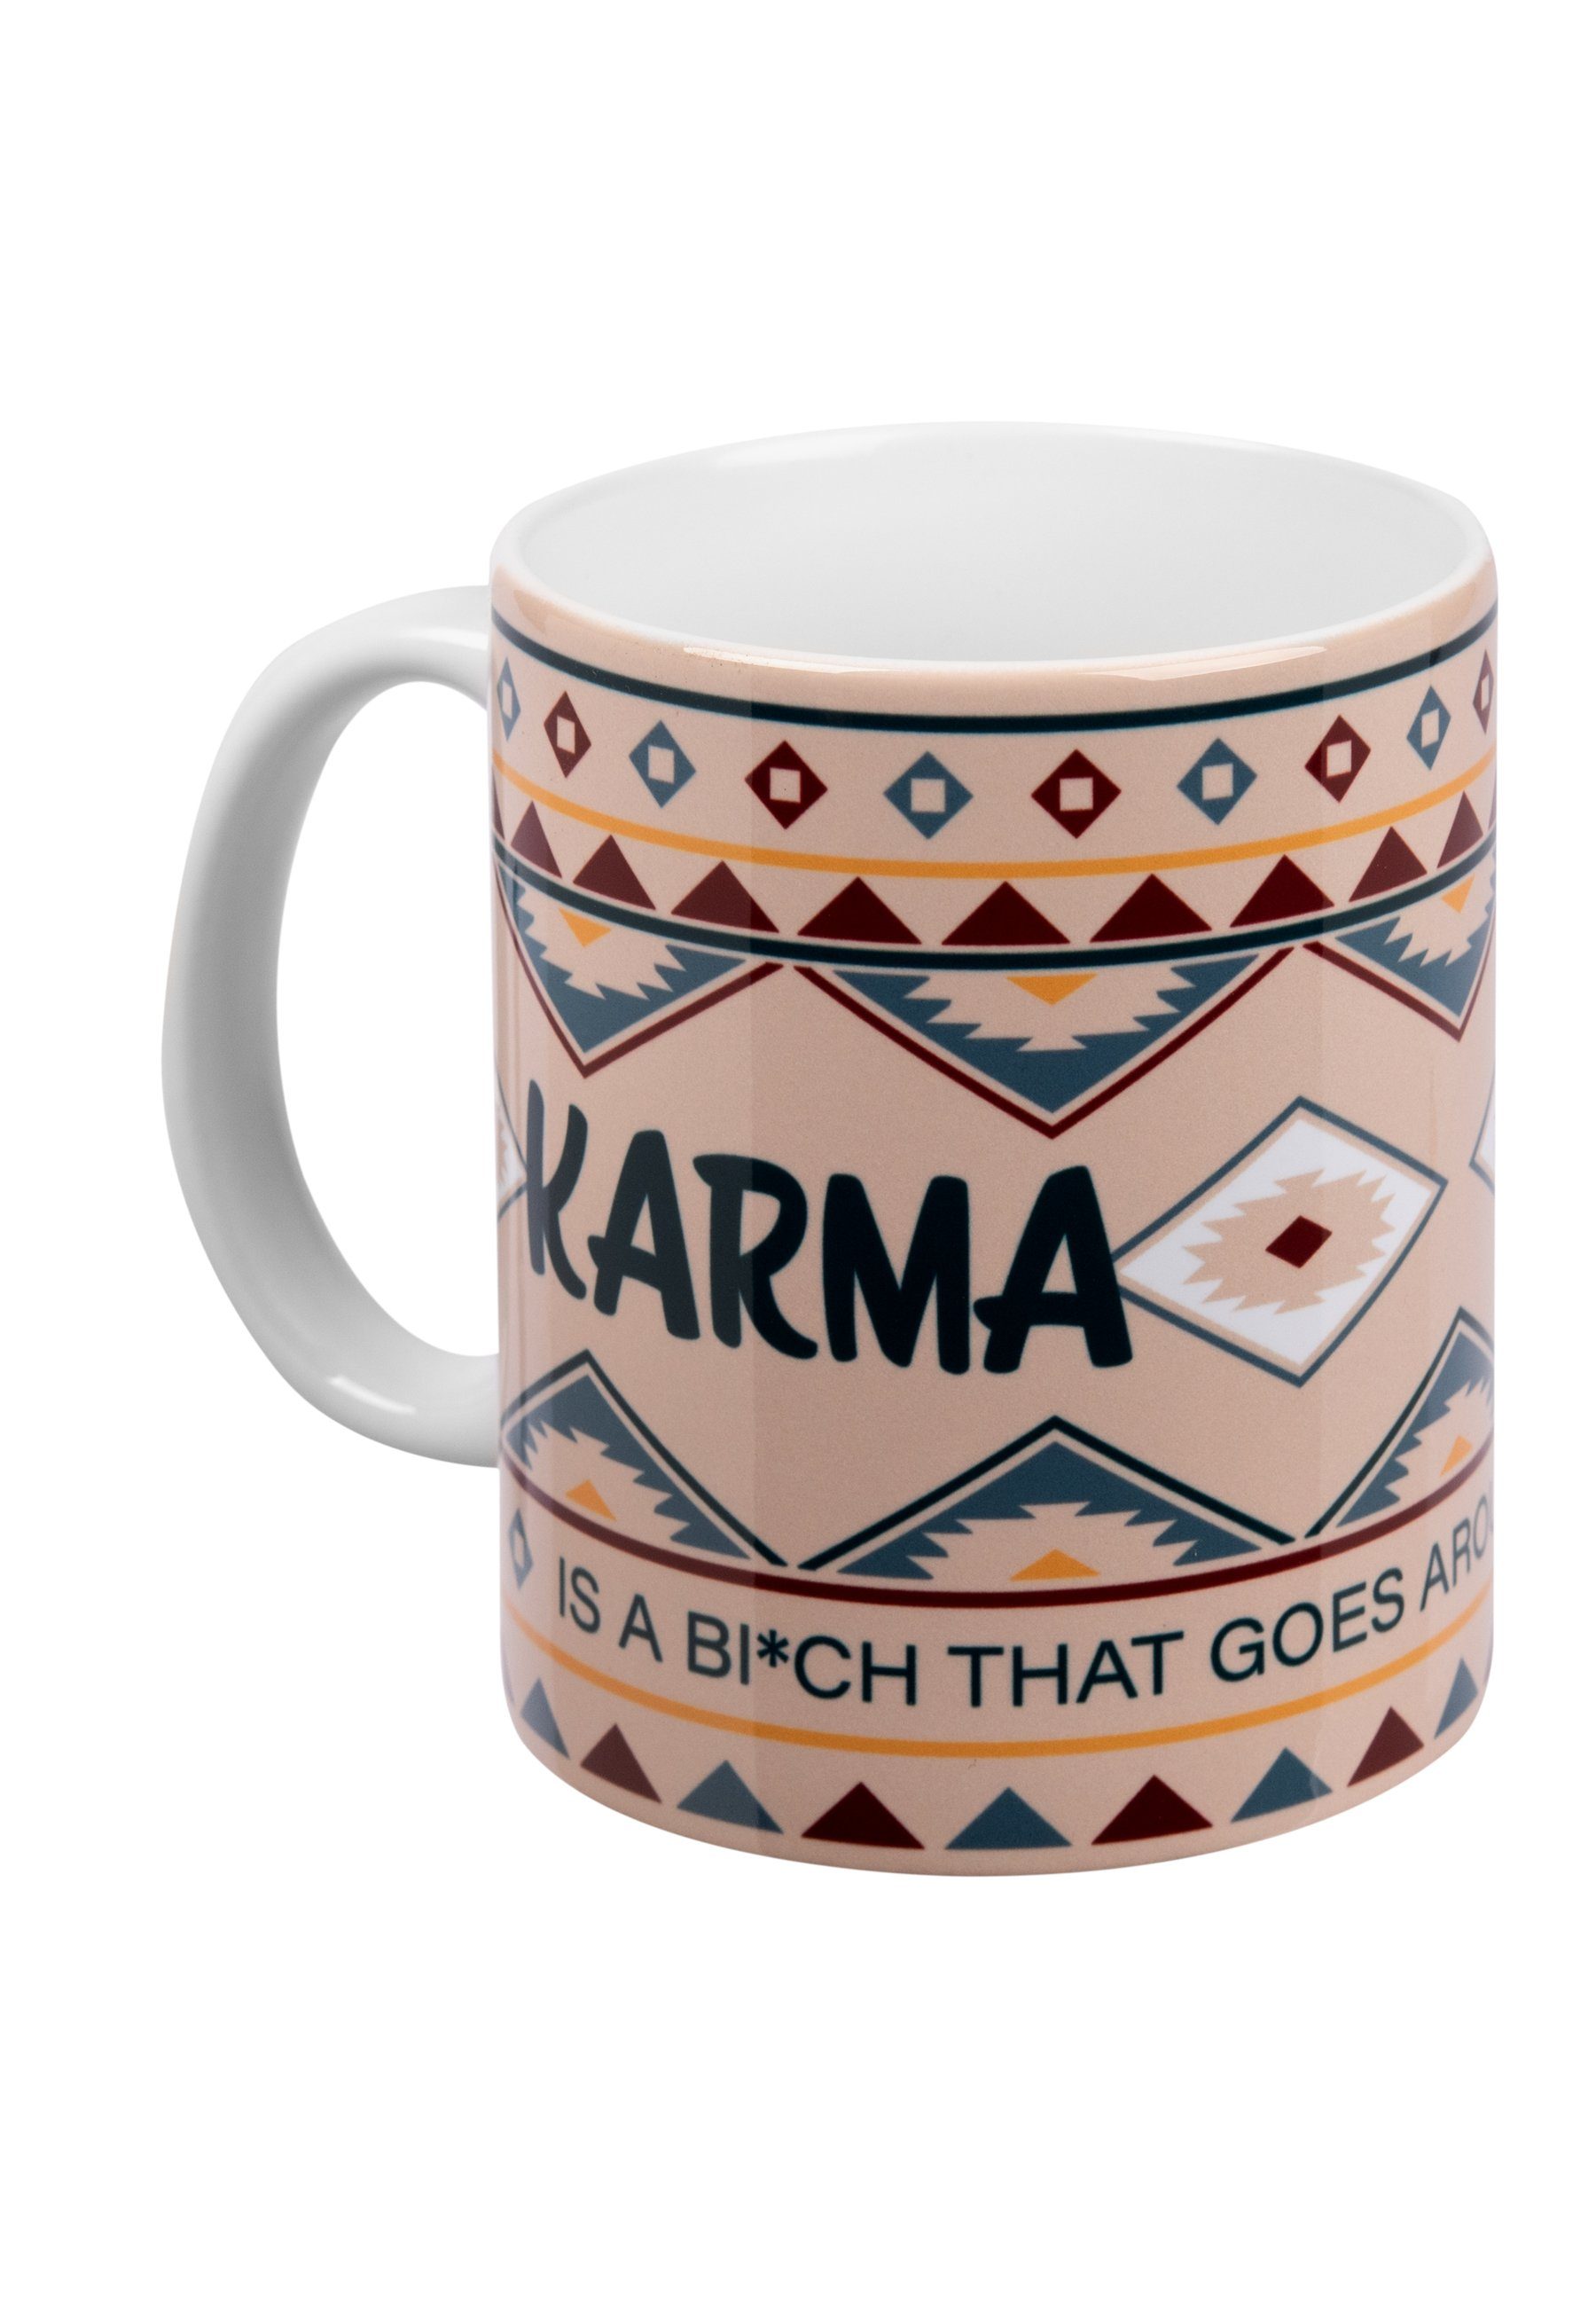 320ml, Karma Karma Bi*ch Keramik Keramik is Kaffeetasse Labels® Tasse - a United aus Tasse